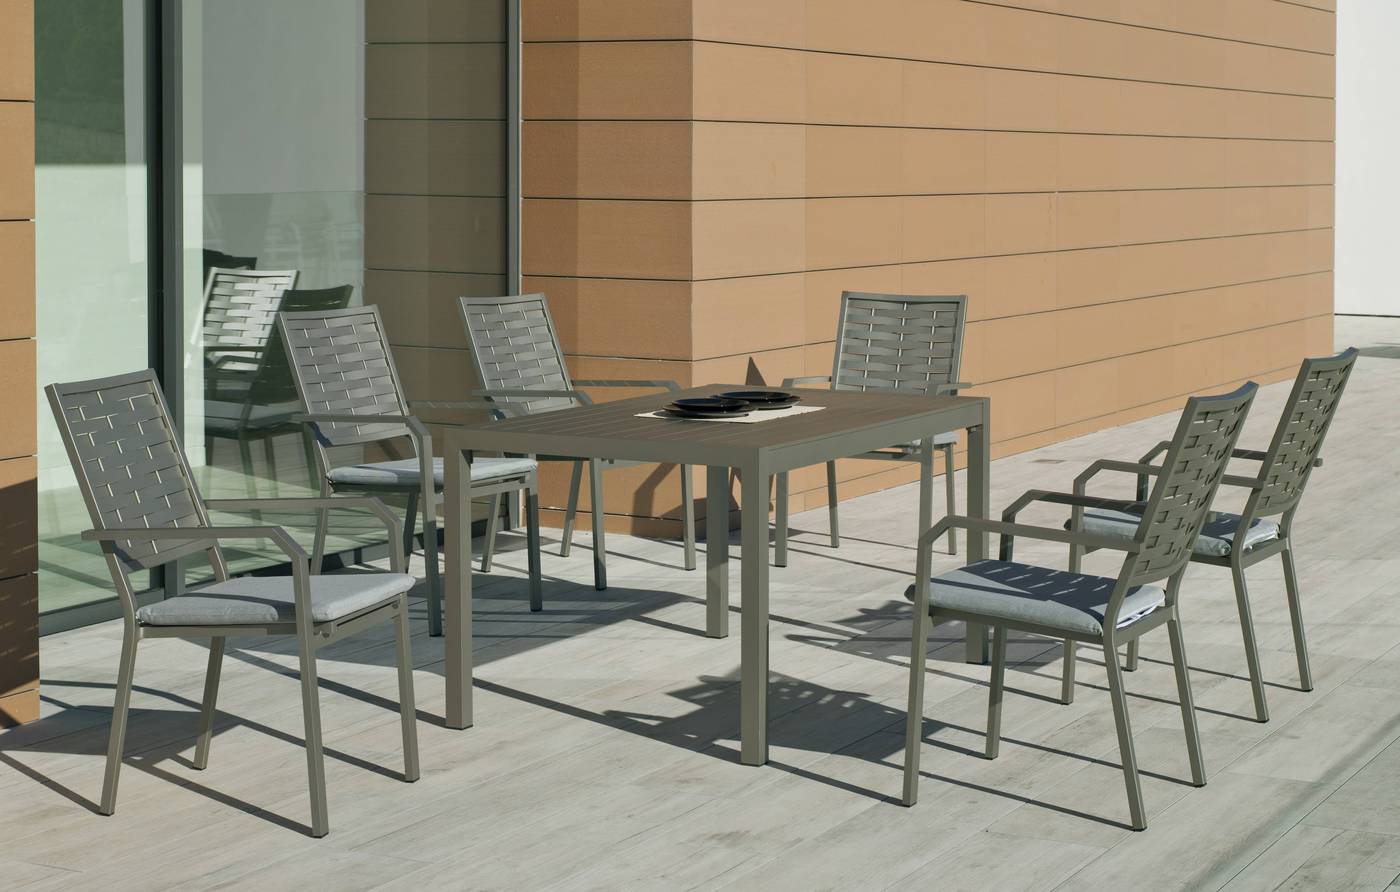 Set Aluminio Palma-Augusta 200-8 - Conjunto de aluminio luxe para jardín o terraza: Mesa rectangular 200 cm. + 8 sillones. Disponible en color blanco, bronce, antracita y champagne.